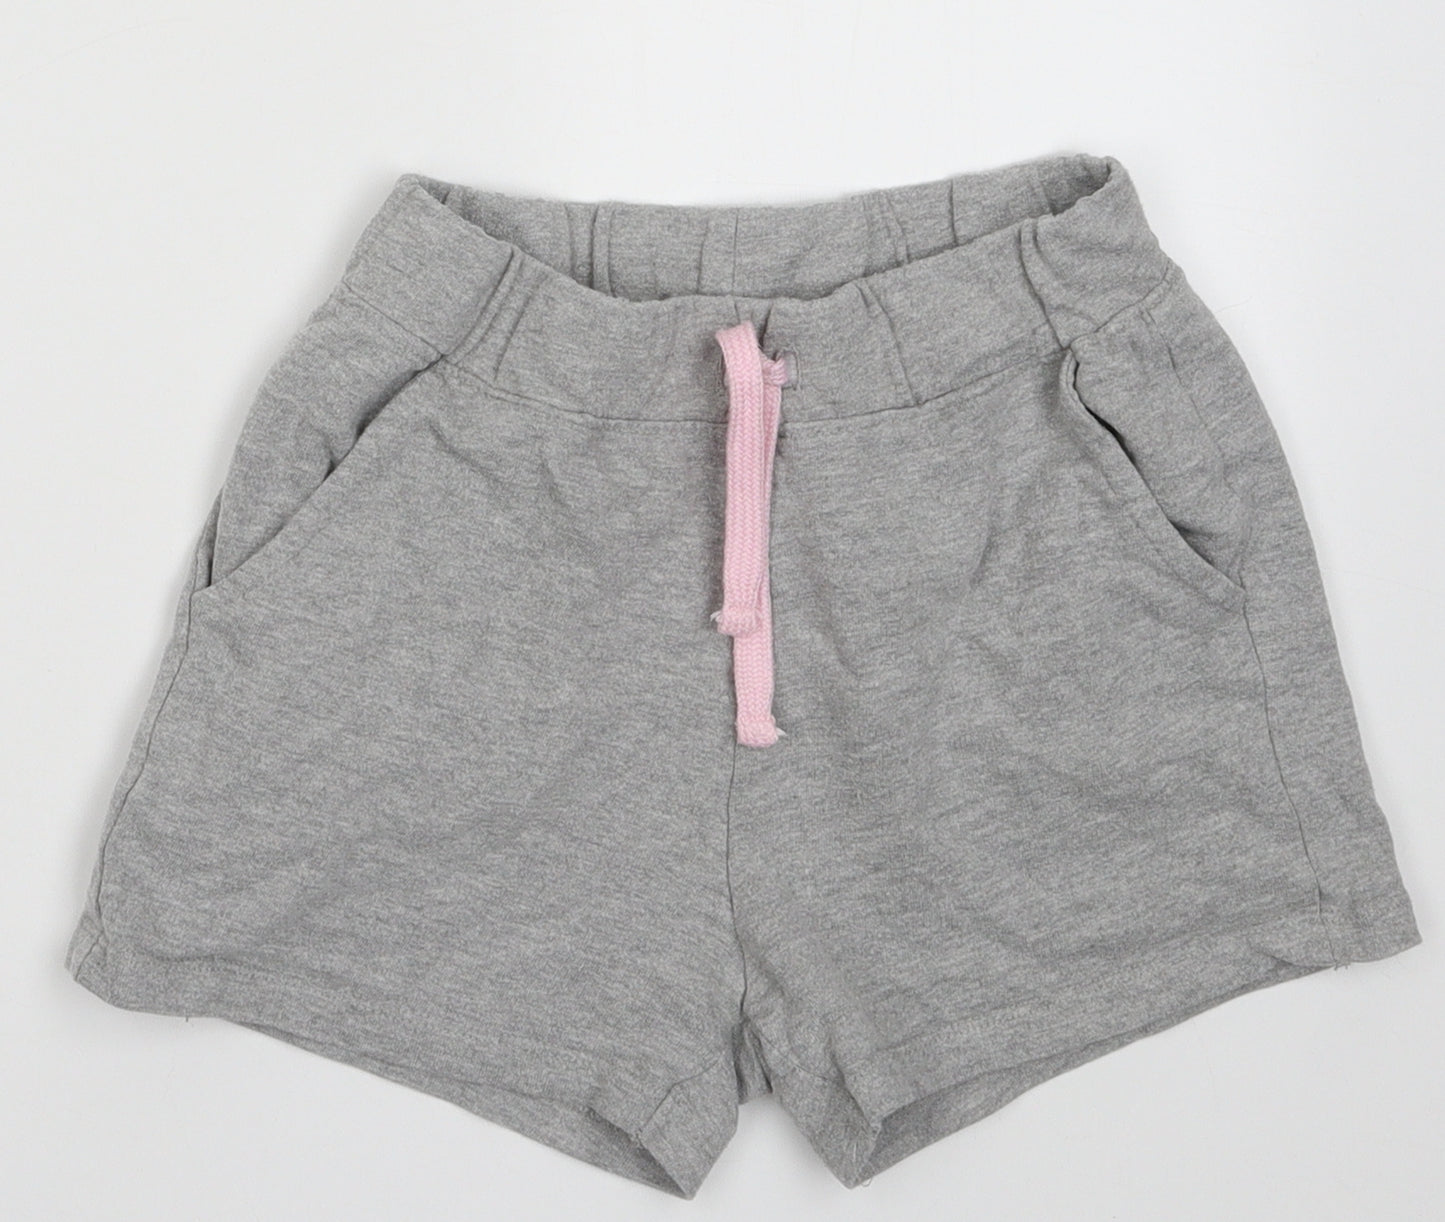 Jeff & Co  Girls Grey  Cotton Sweat Shorts Size 11-12 Years  Regular Tie